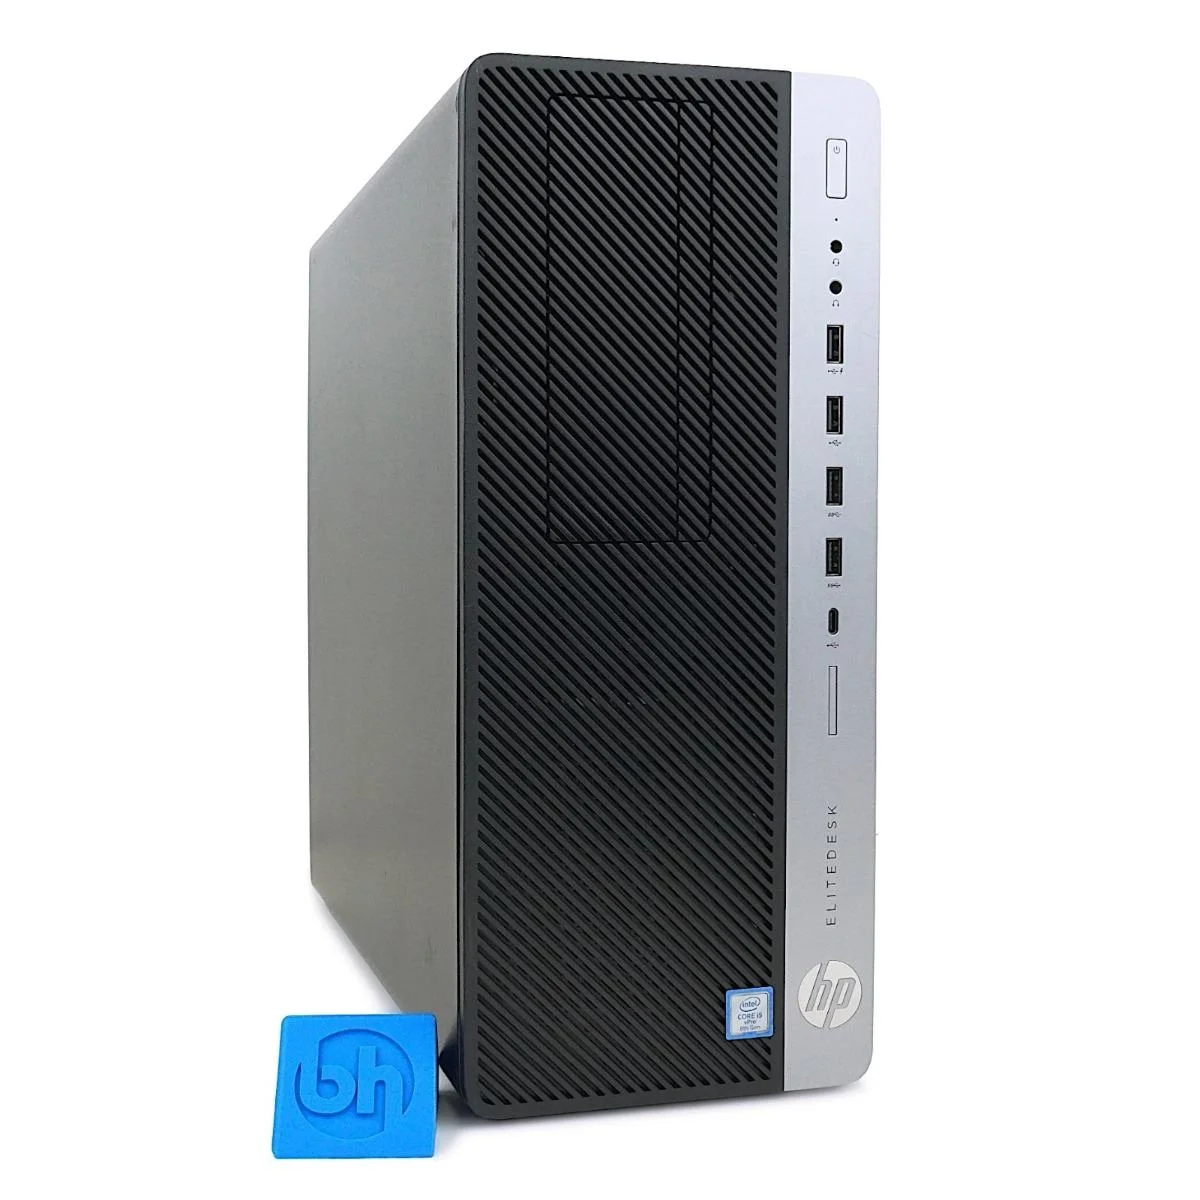 HP EliteDesk 800 G4 Tower Pre-Configured Desktop PC